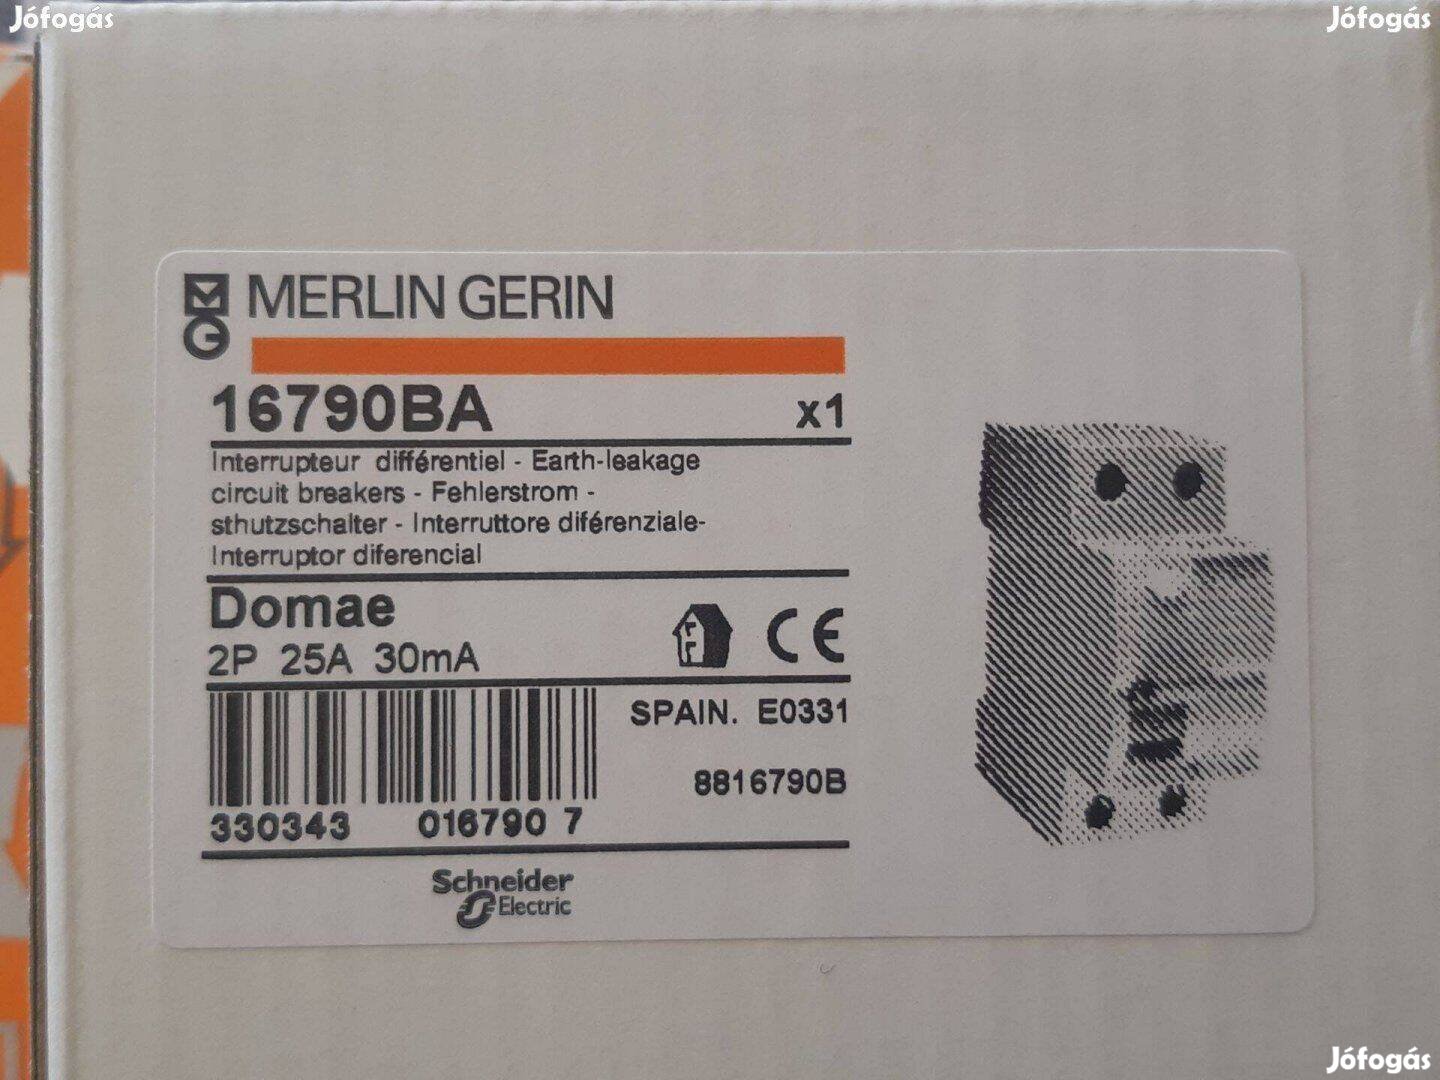 Schneider Merlin Gerin Áram-védőkapcsoló (Fi-relé) analóg 2P 25A 30mA